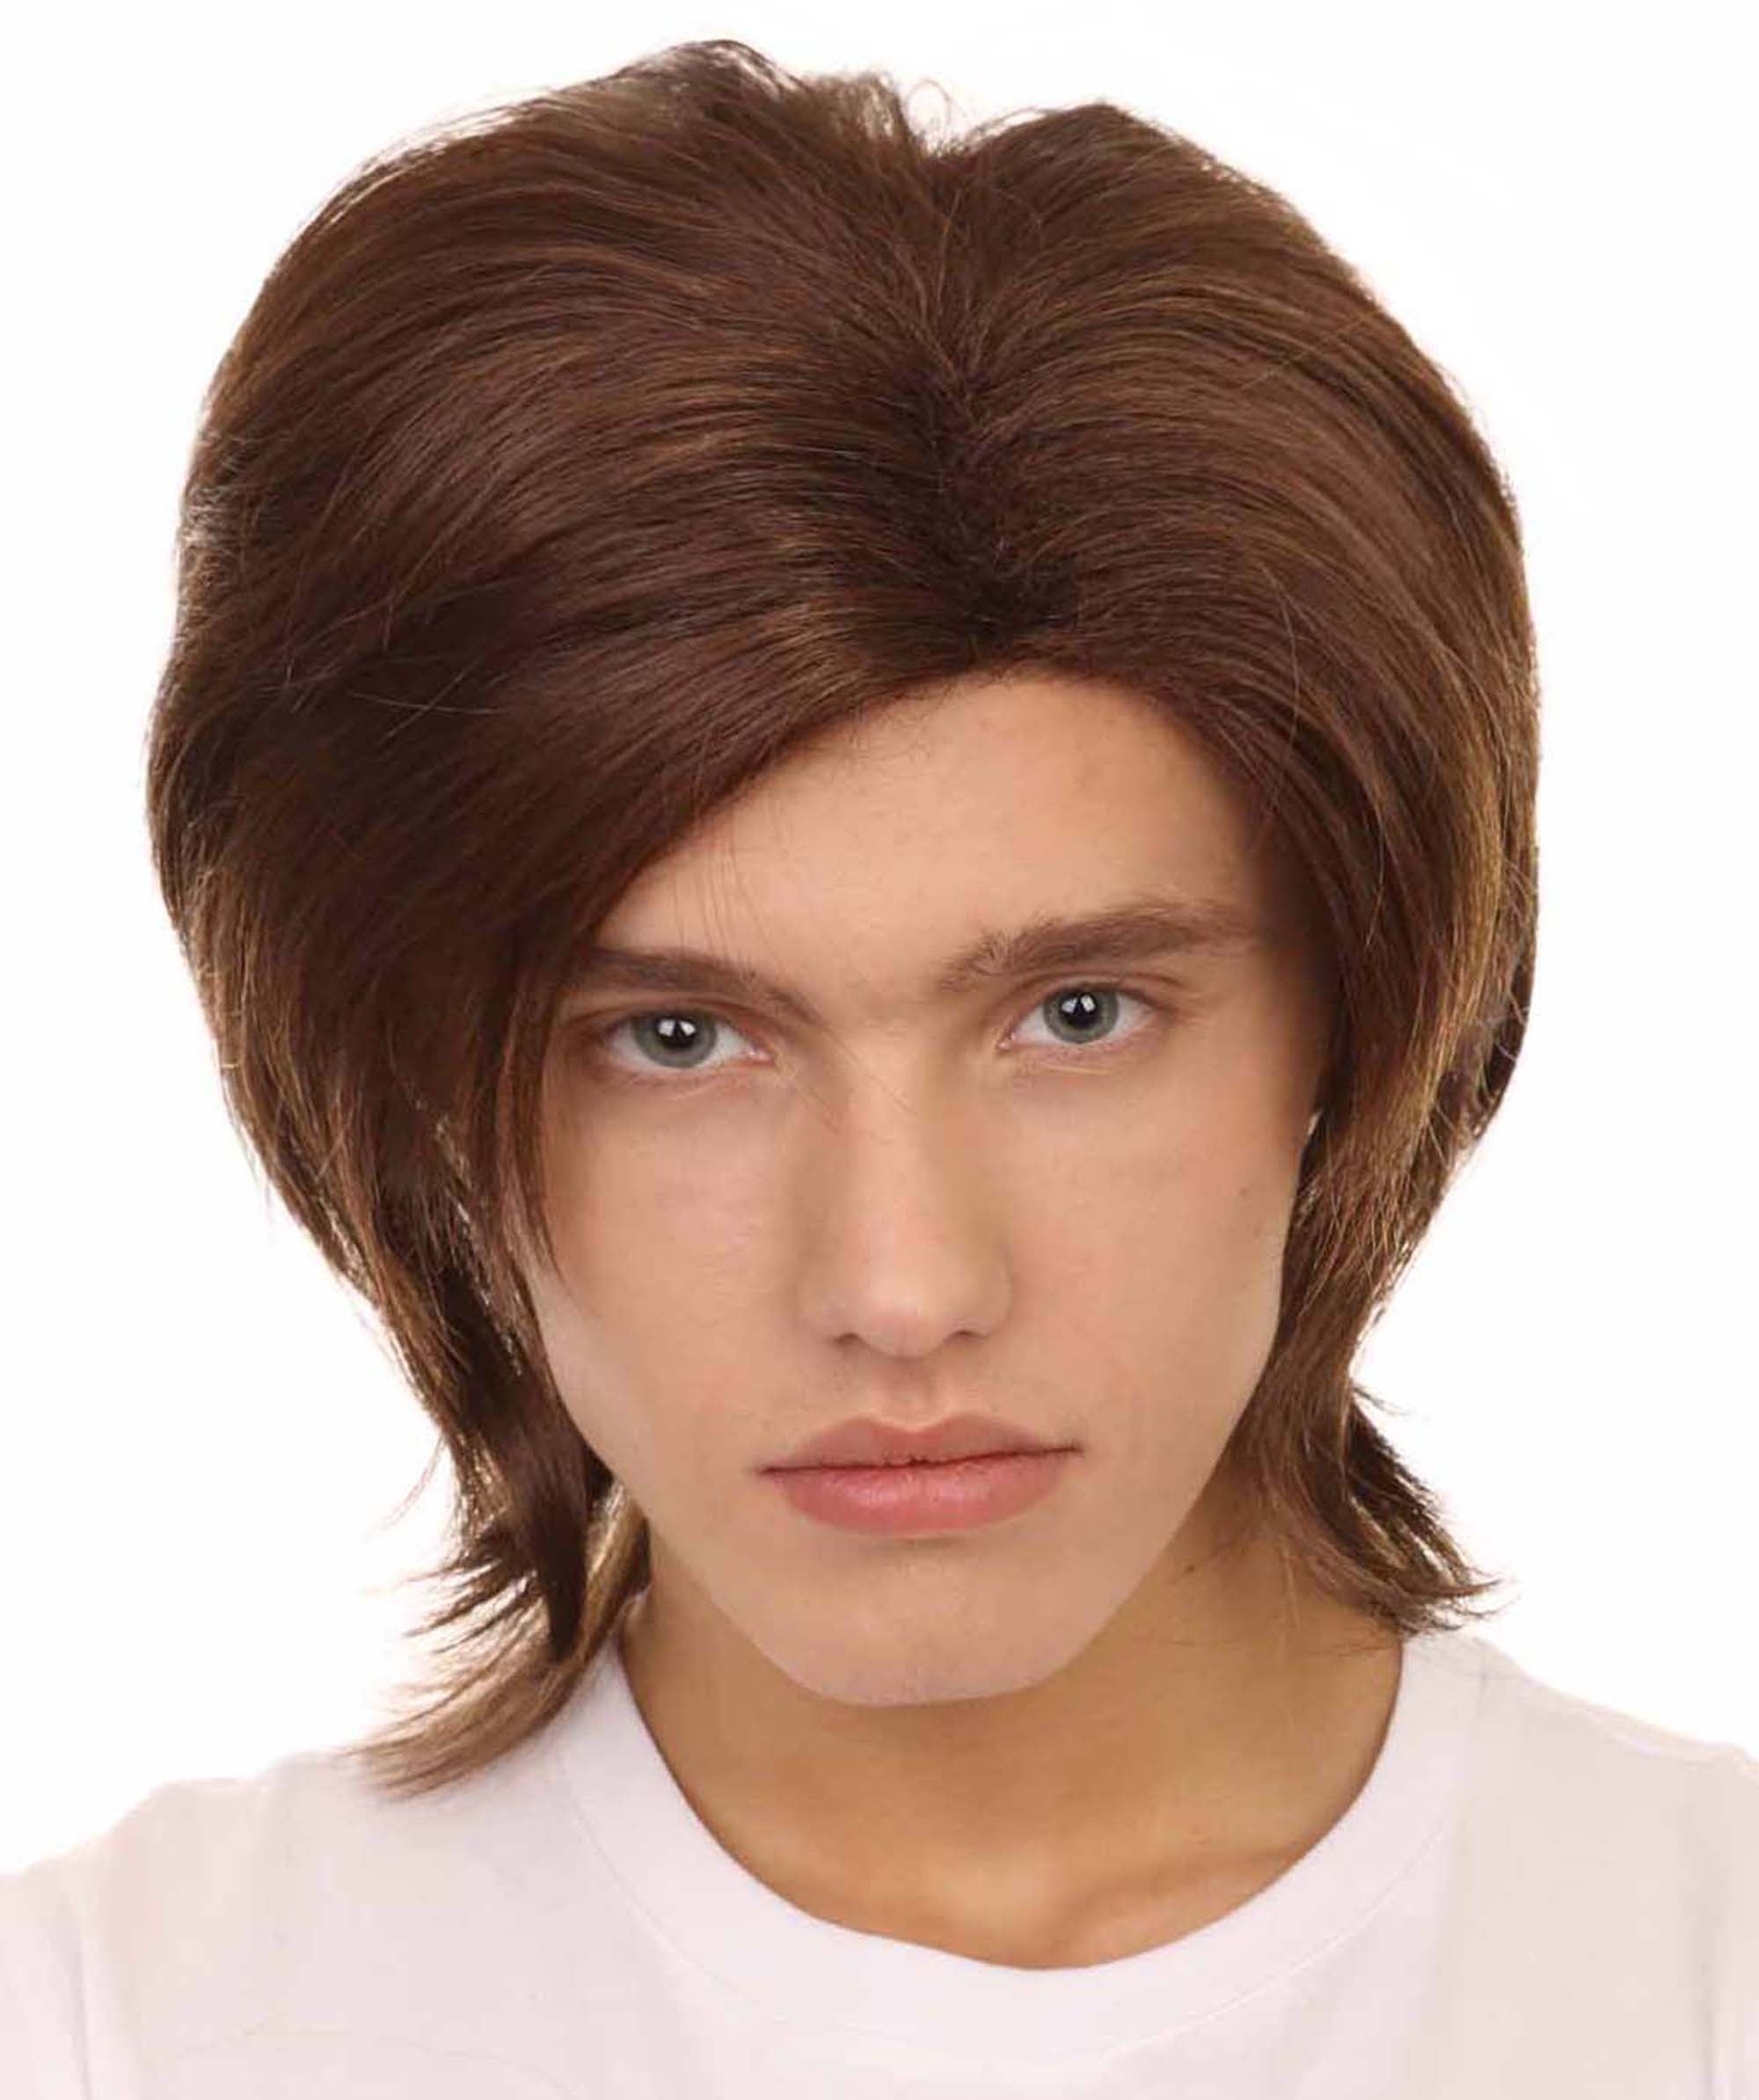 Tokyo Style Wig | Asian Cosplay Halloween Wig | Premium Breathable Capless Cap